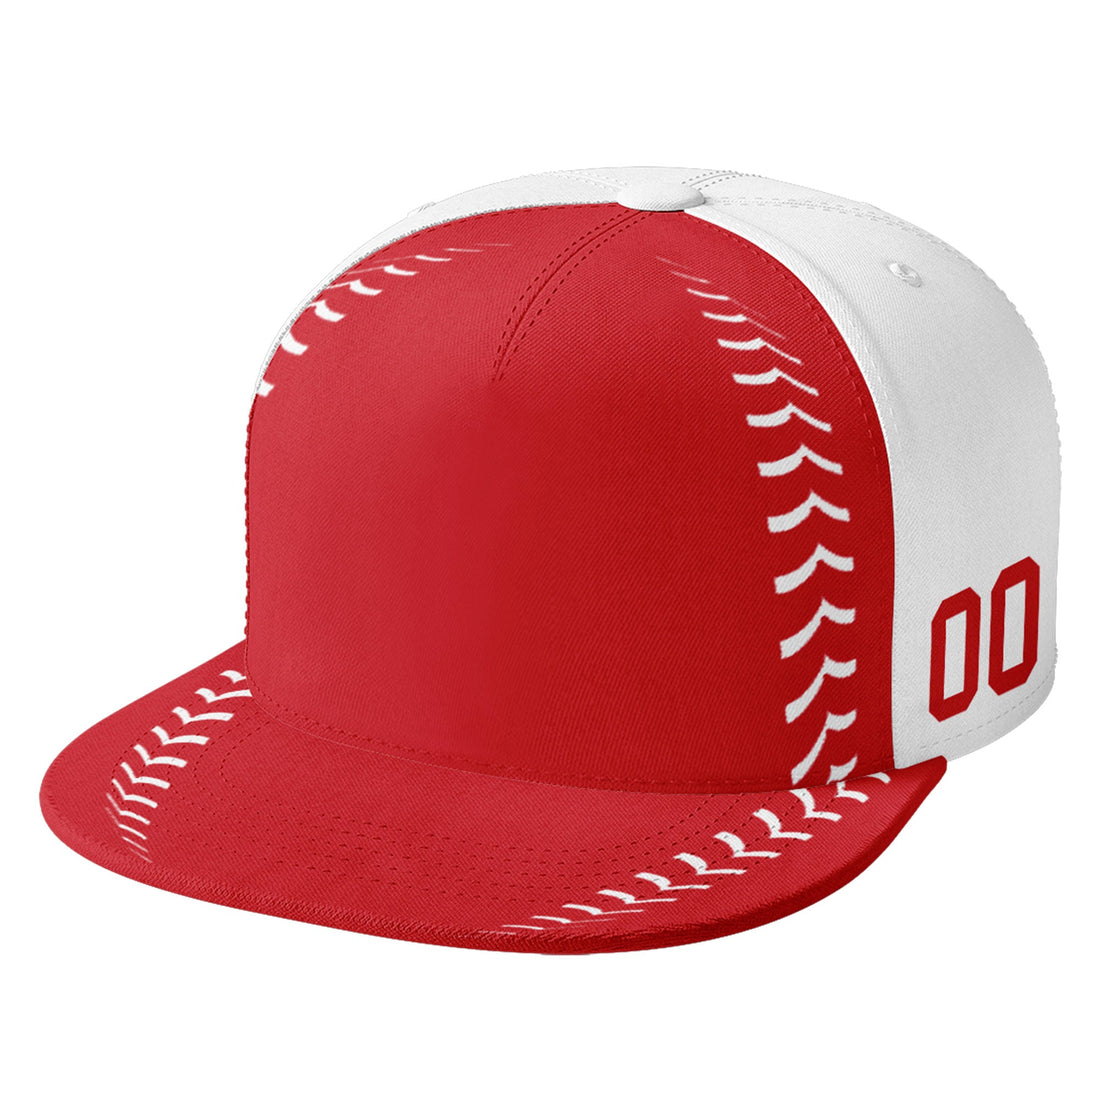 Custom Sport Design Hat Stitched Adjustable Snapback Personalized Baseball Cap PR067B-bd0b00d9-ce